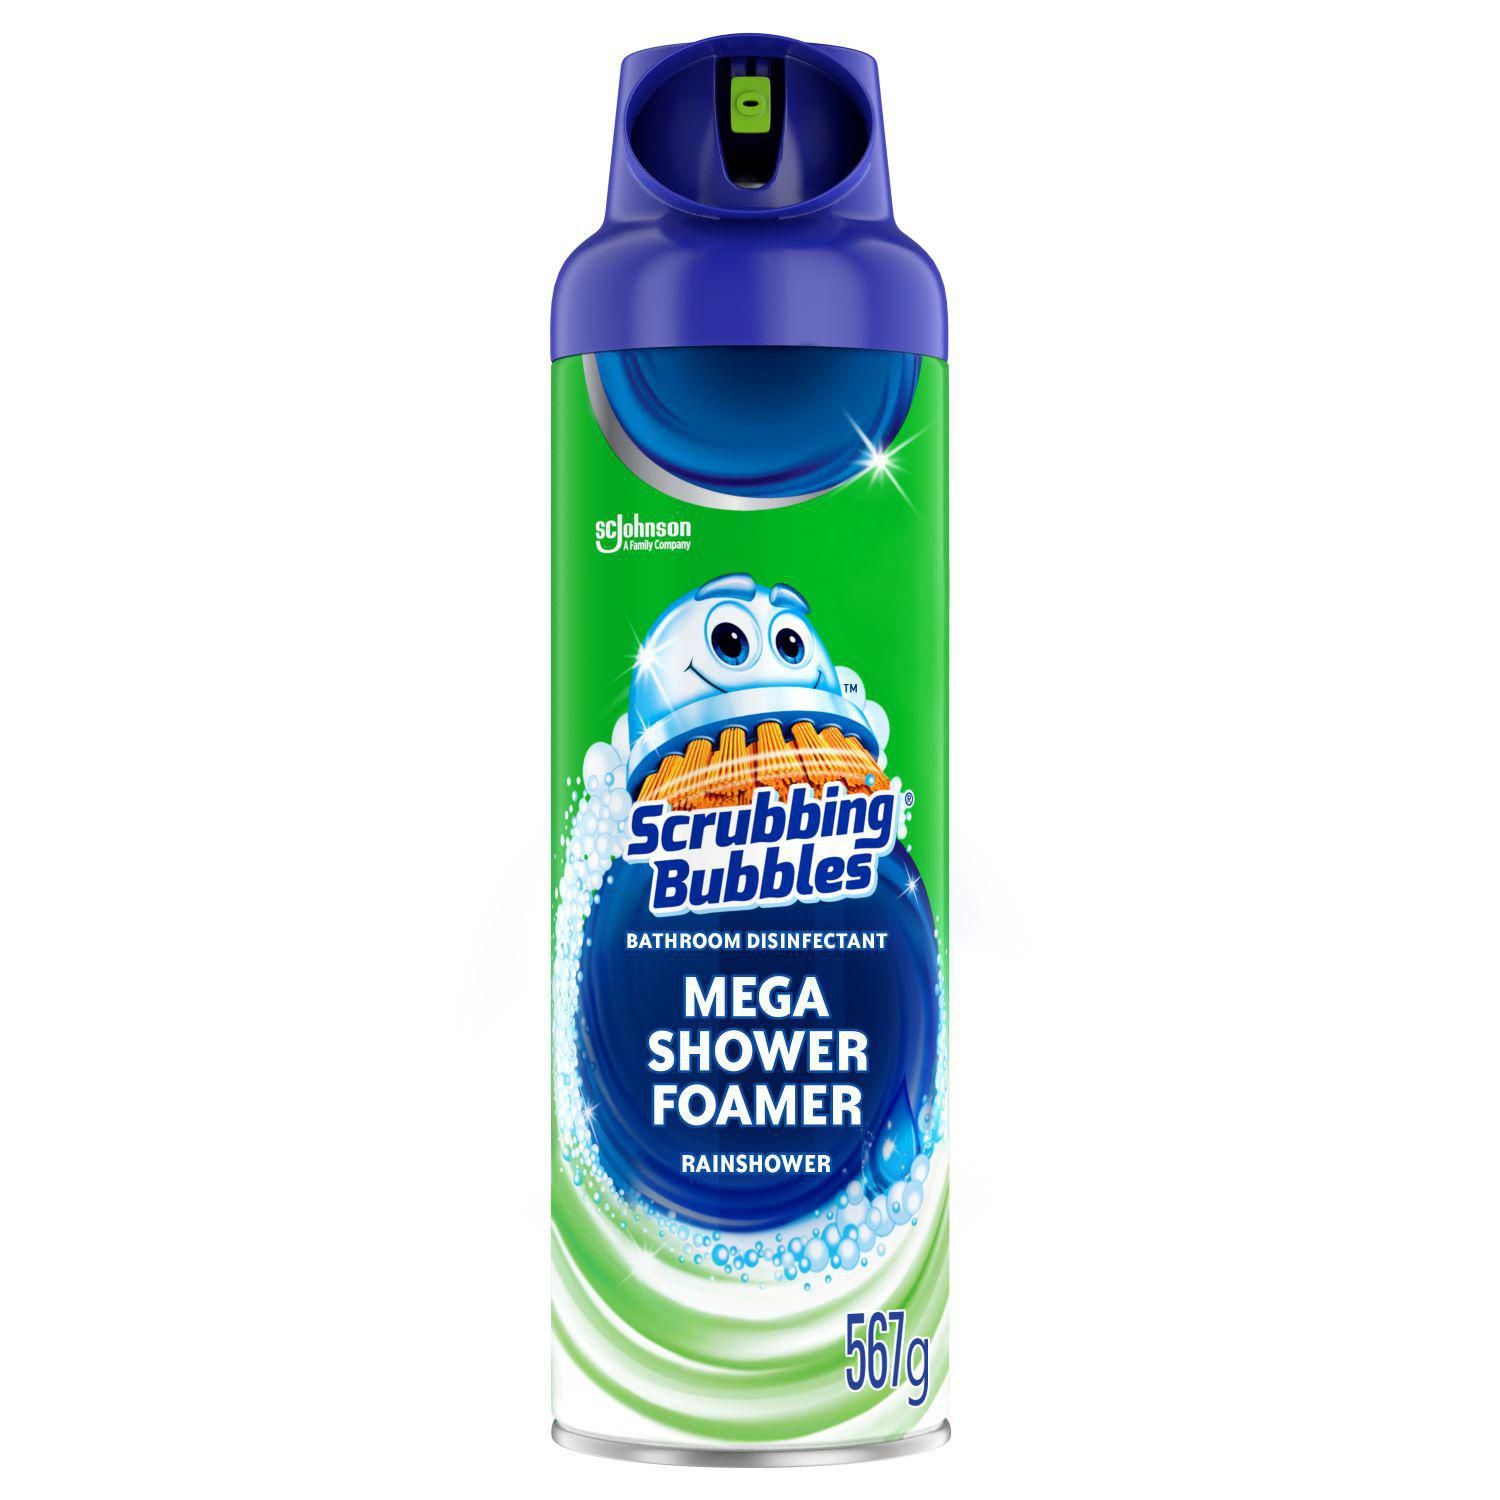 Scrubbing Bubbles® Mega Shower Foamer, Rainshower Scent, 567g - Each